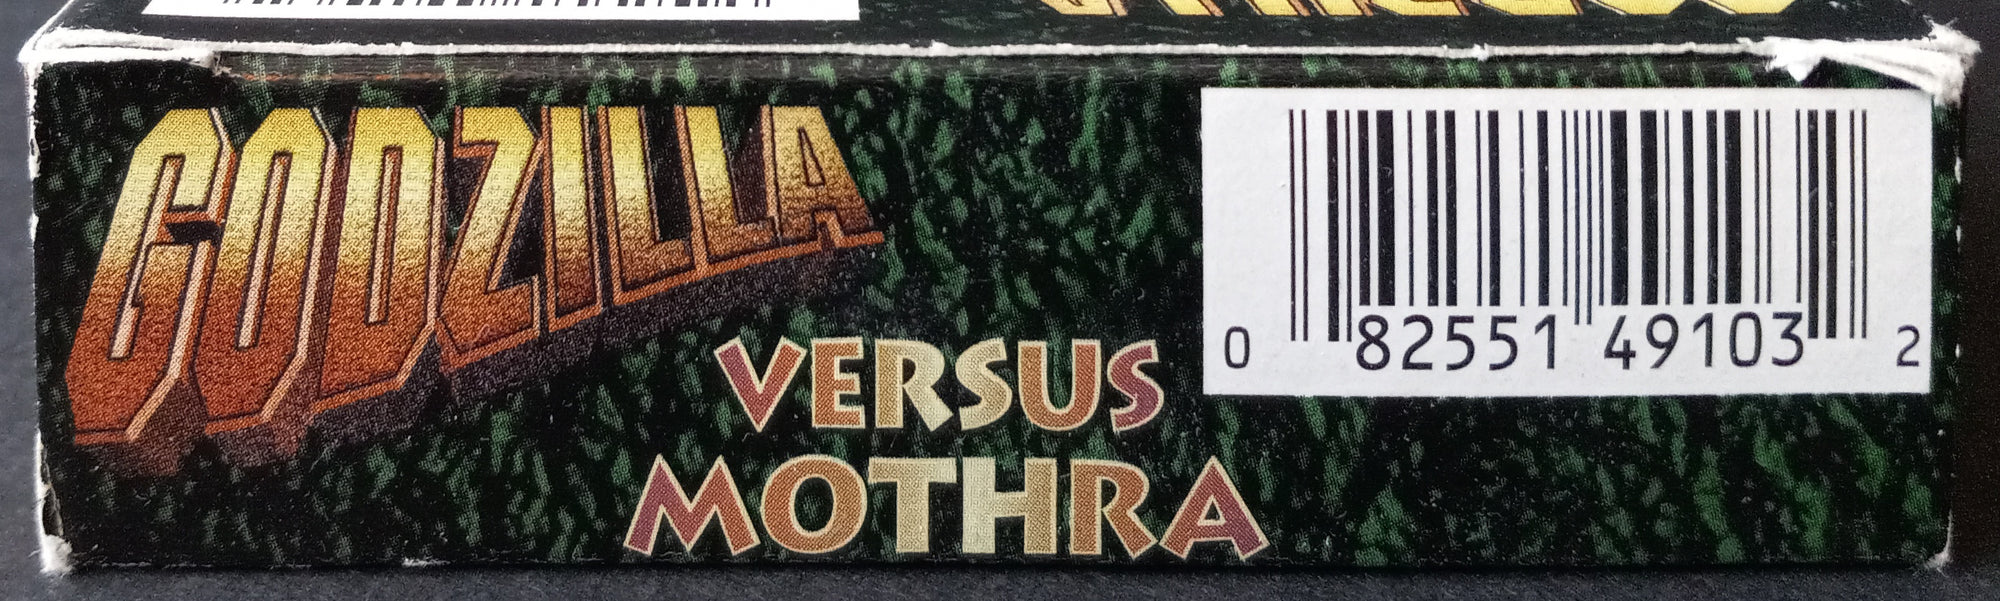 Godzilla-Mothra-VHS